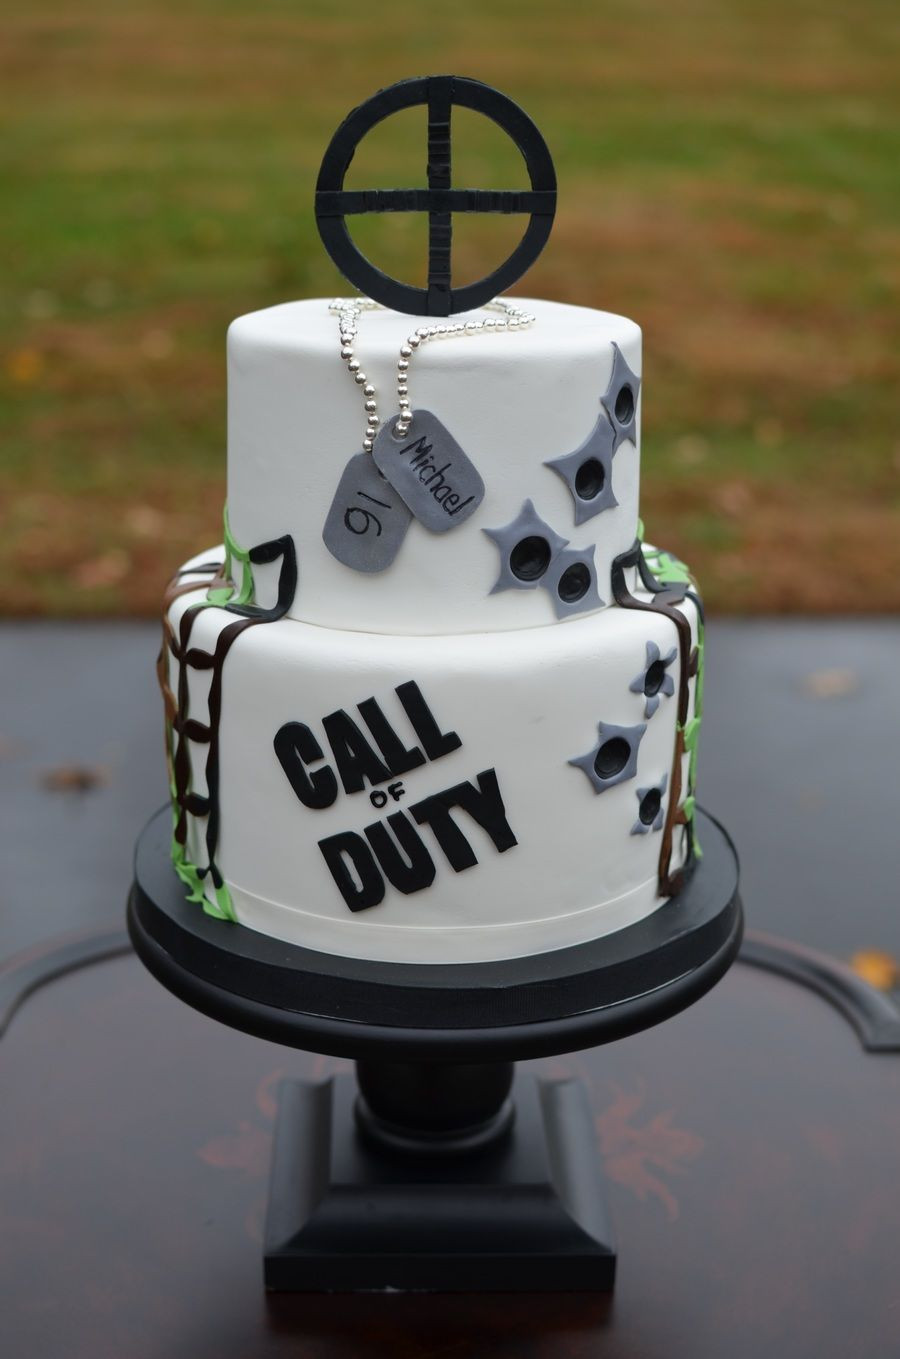 Birthday Party Ideas For Boys Age 16
 Call Duty Birthday Cake cakes cupcakes